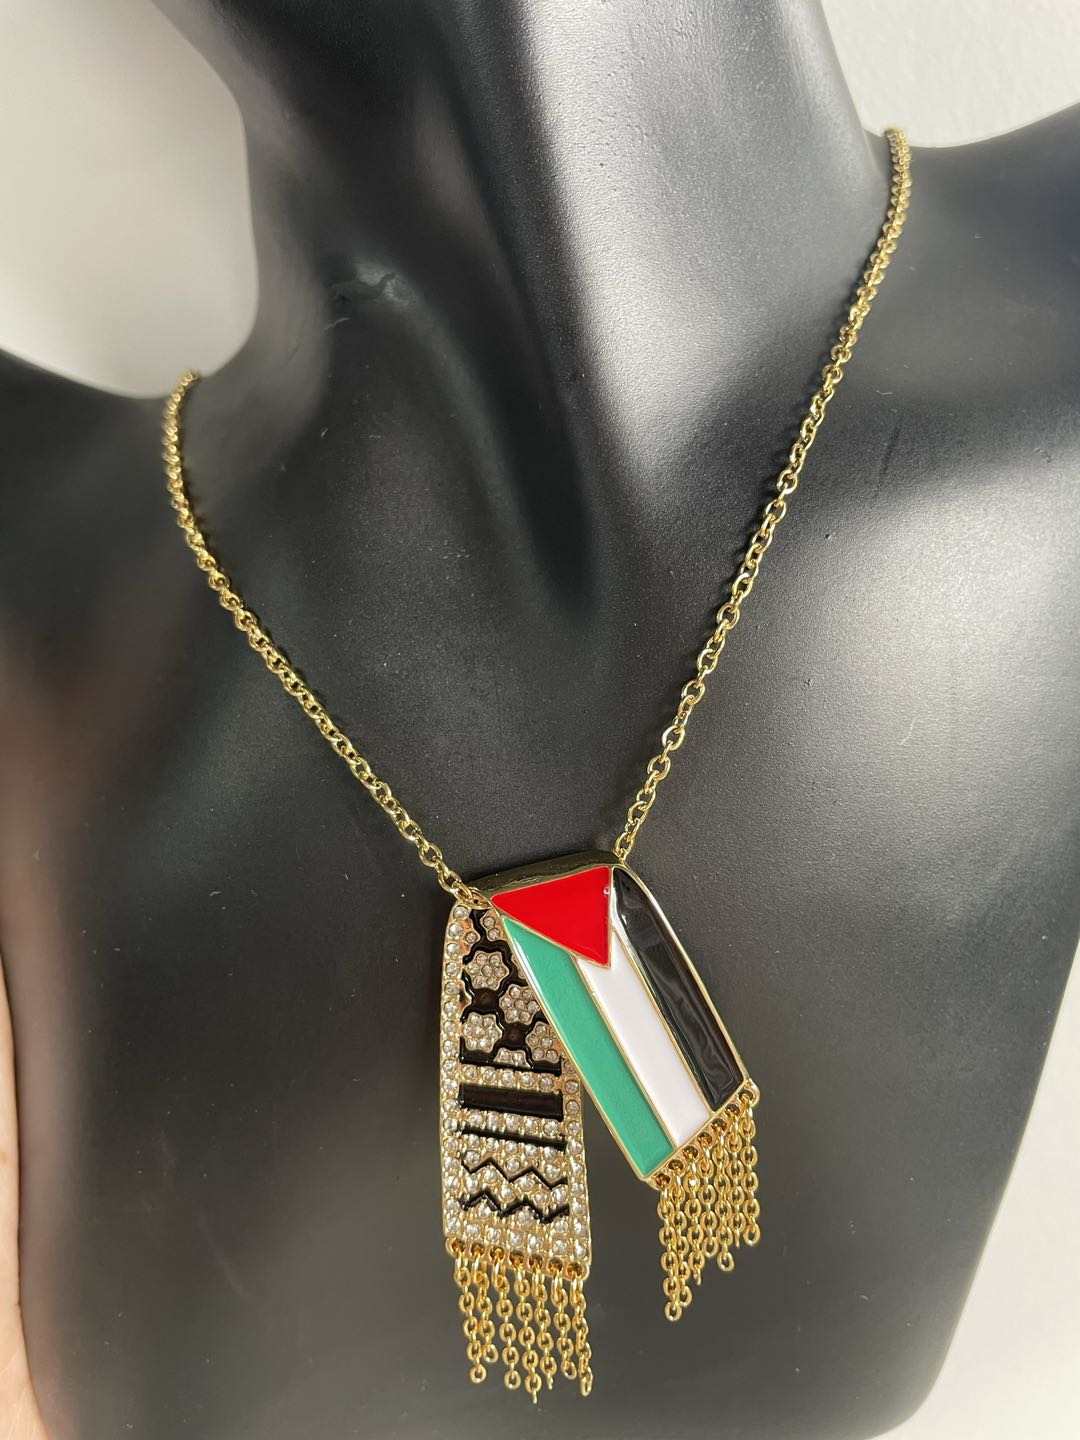 Keffiyeh scarf design necklace - Palestine 100% proceeds donated